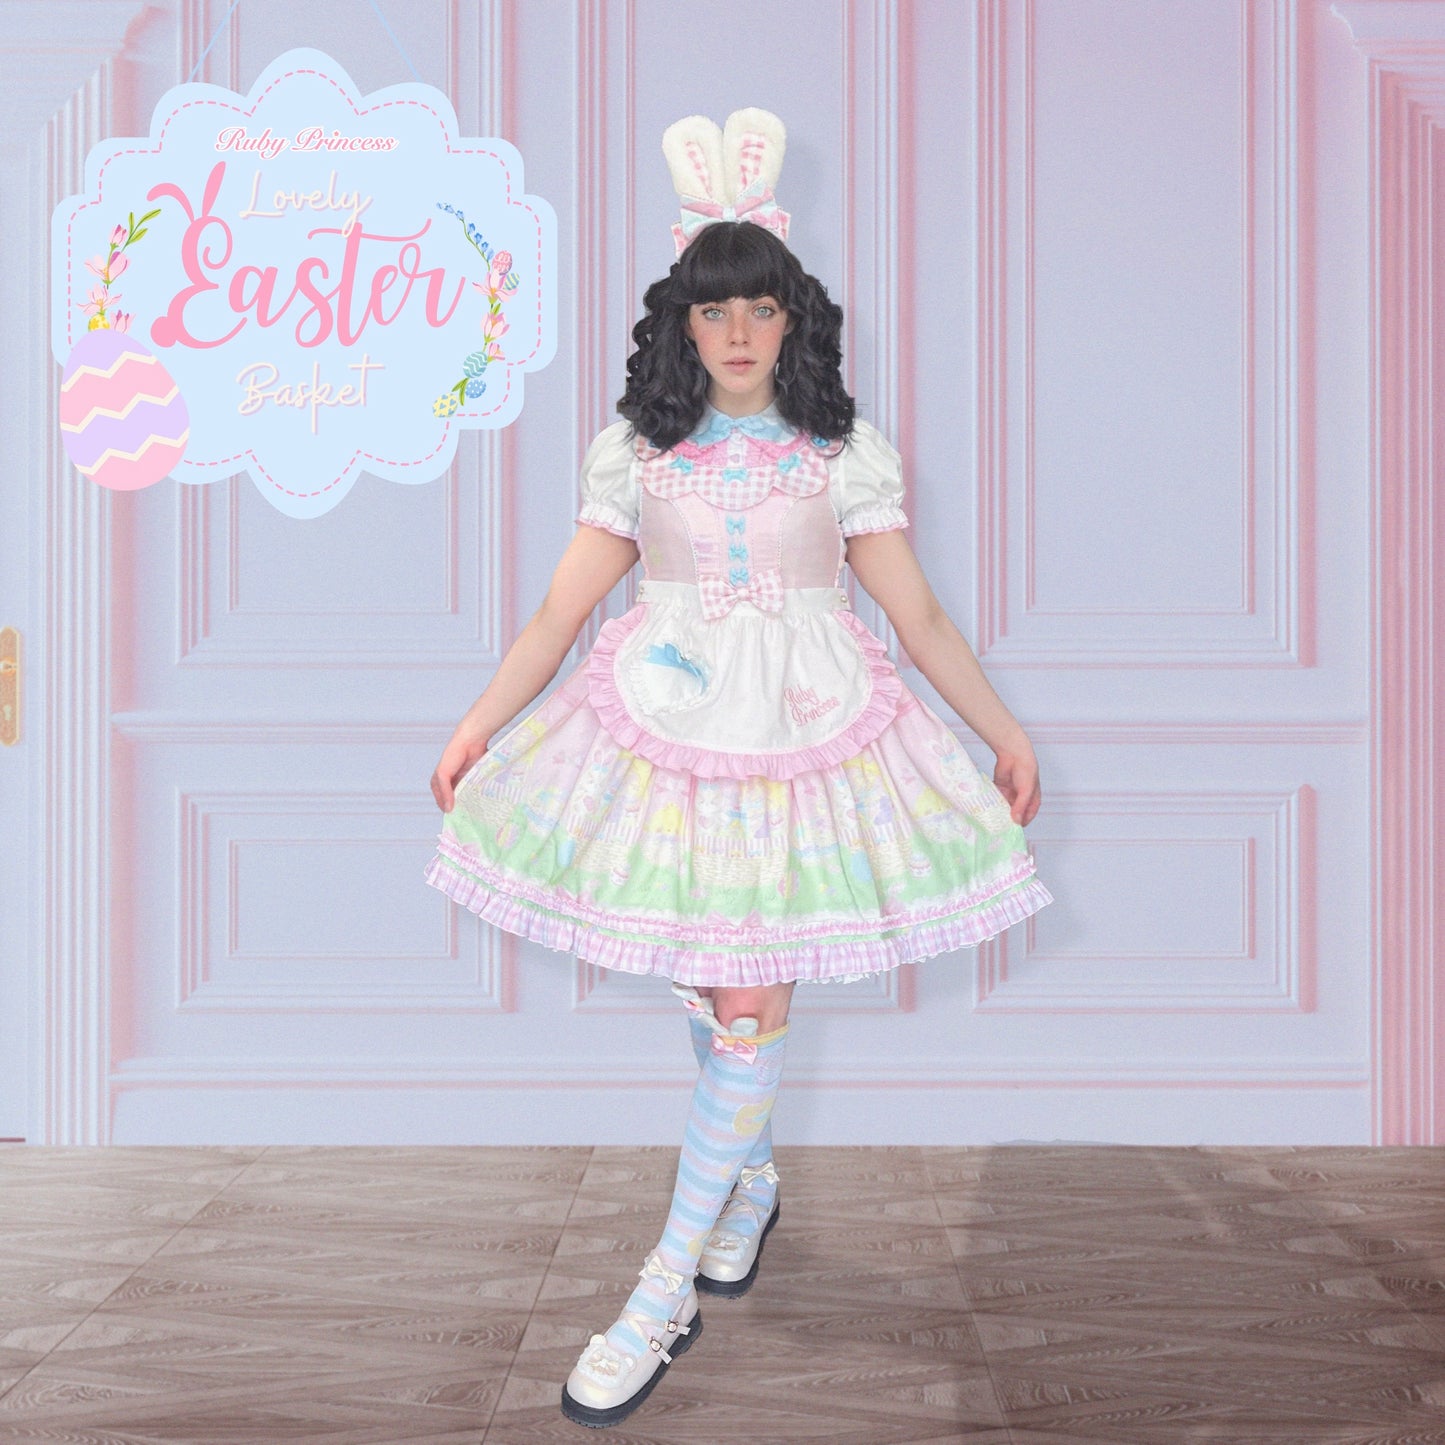 Factory Seconds: Lovely Easter Basket JSK from Ruby Princess